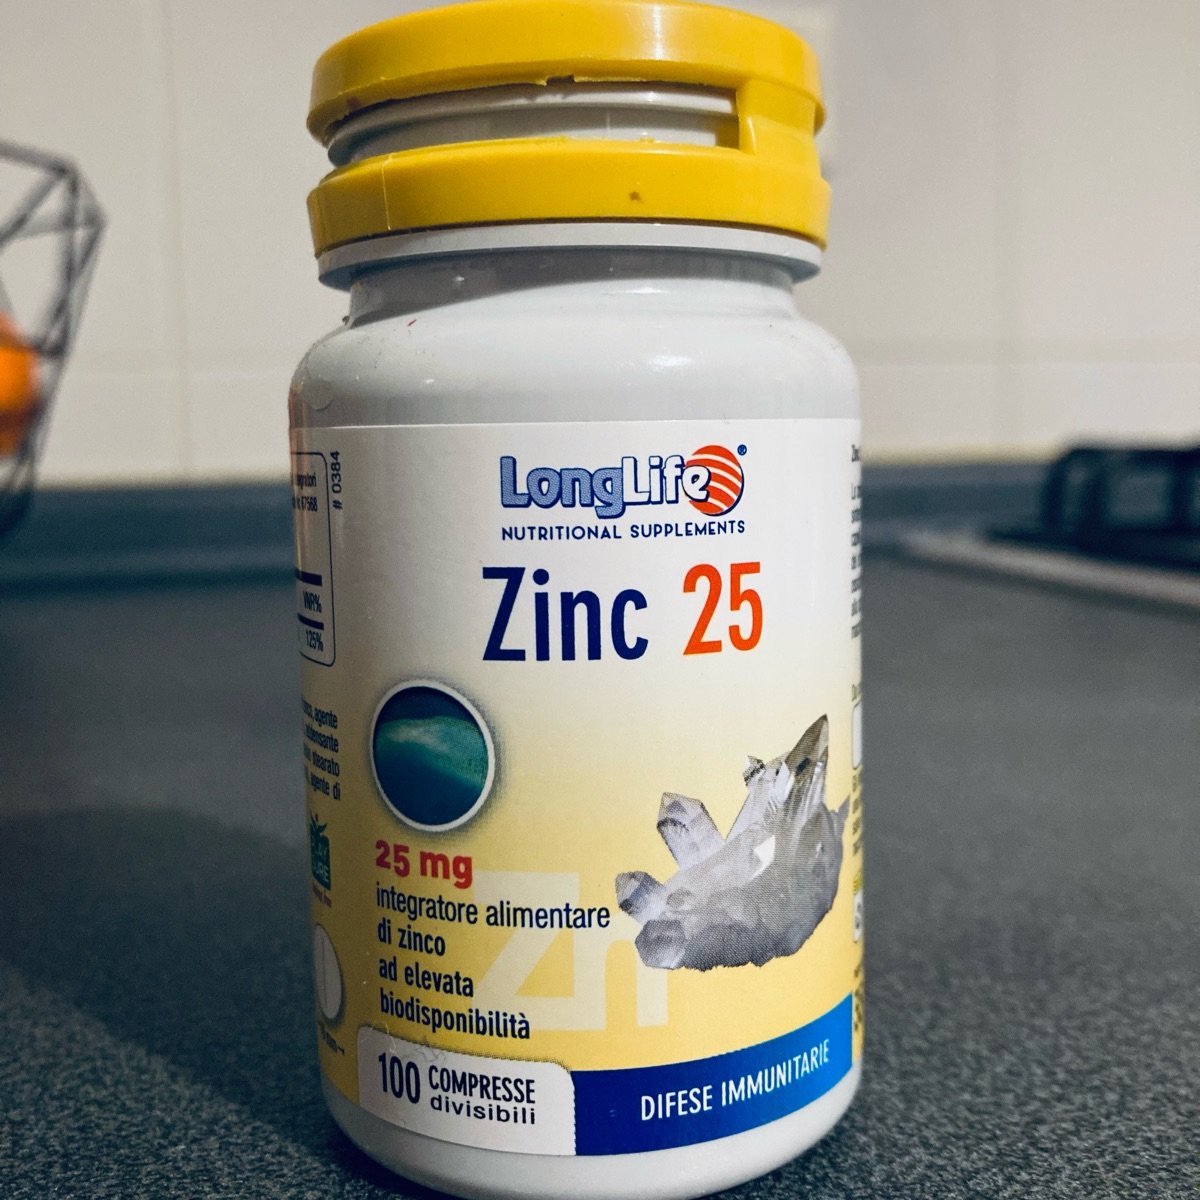 Longlife Zinco 25 Reviews | abillion